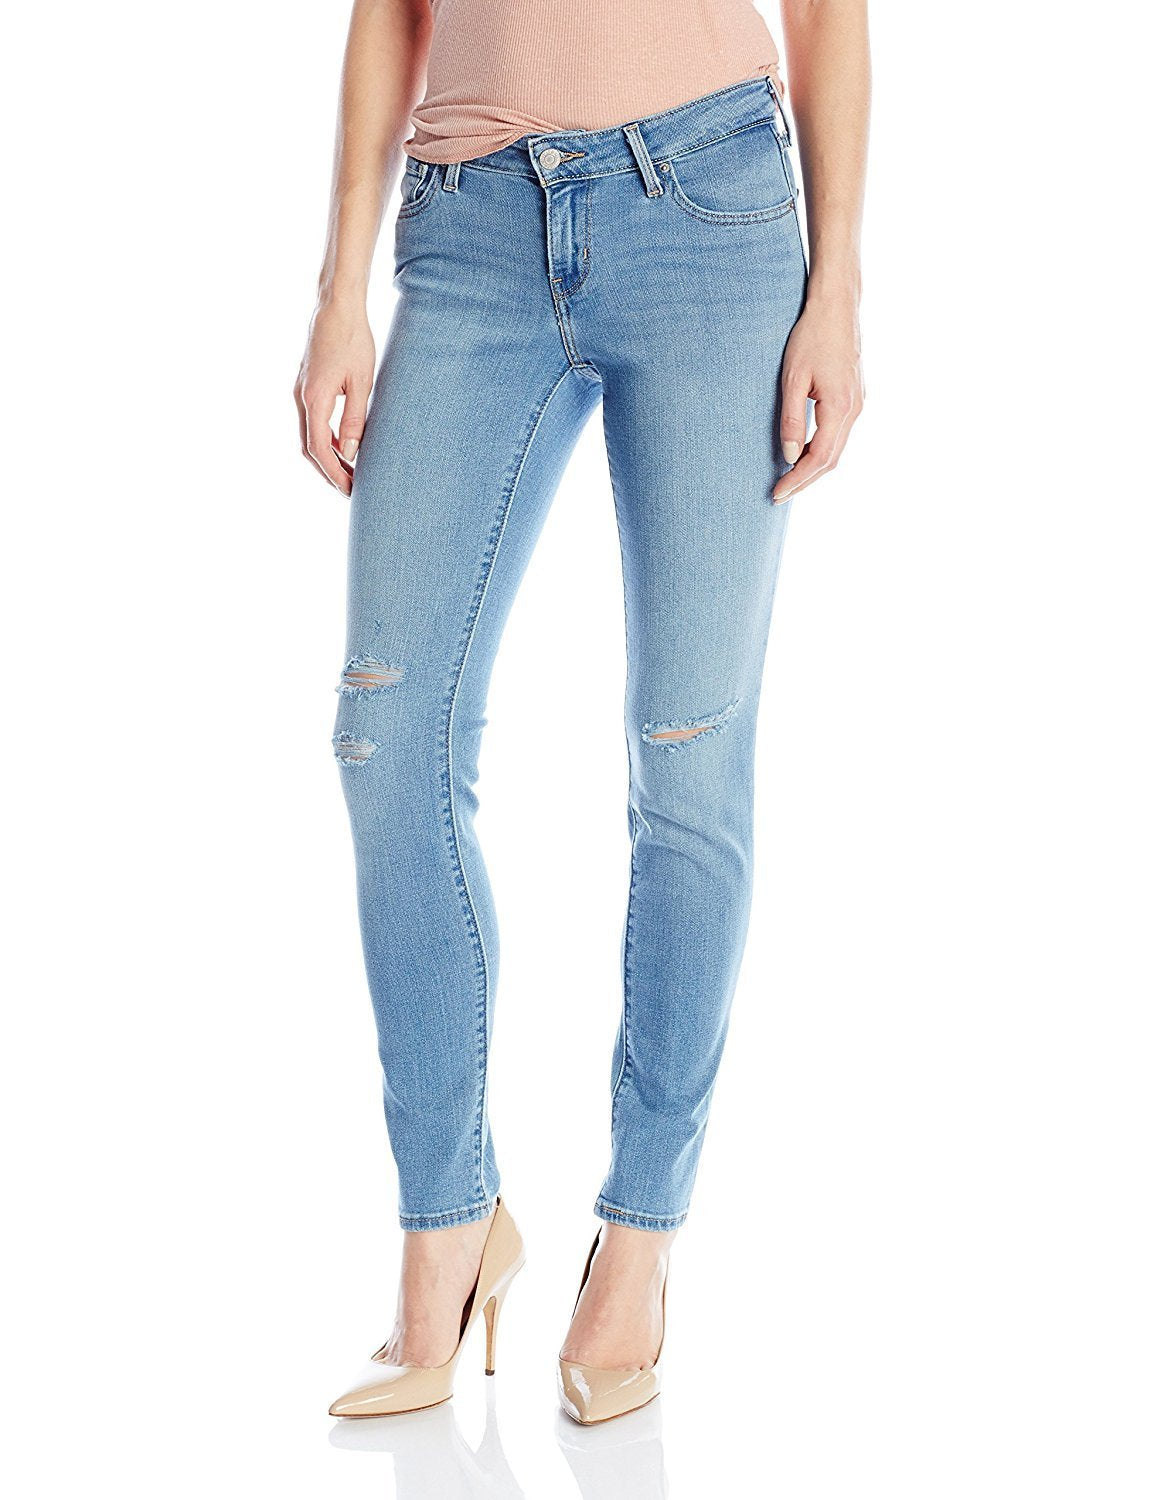 811 curvy skinny jeans